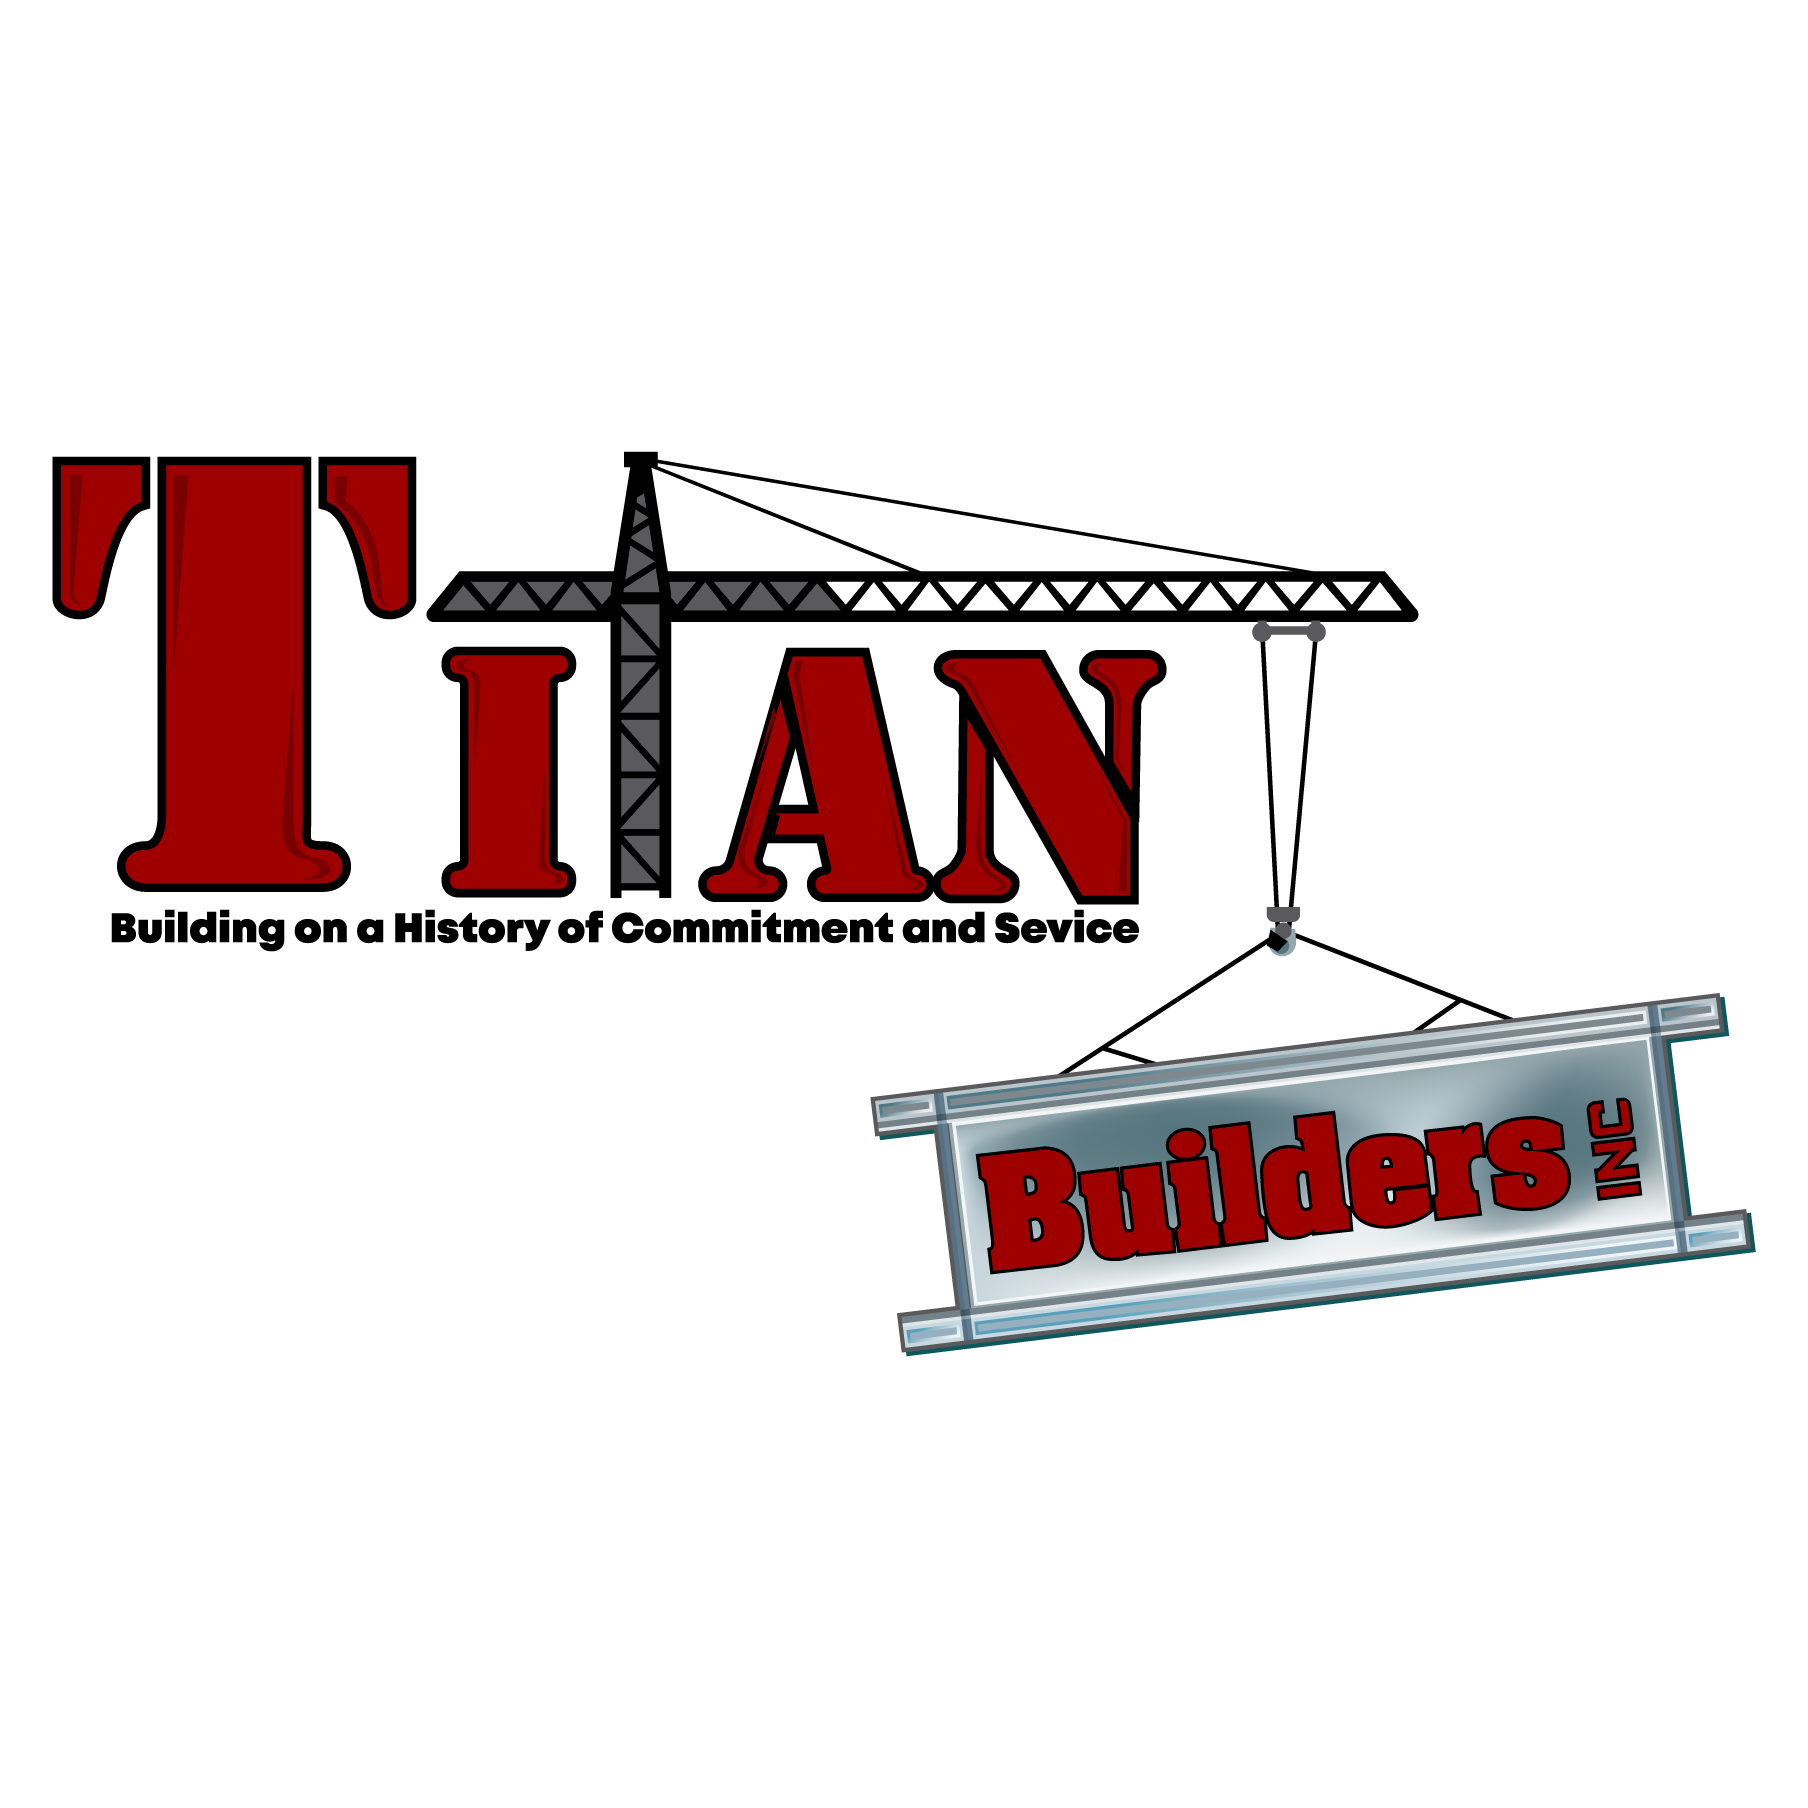 Titan Builders Inc Logo